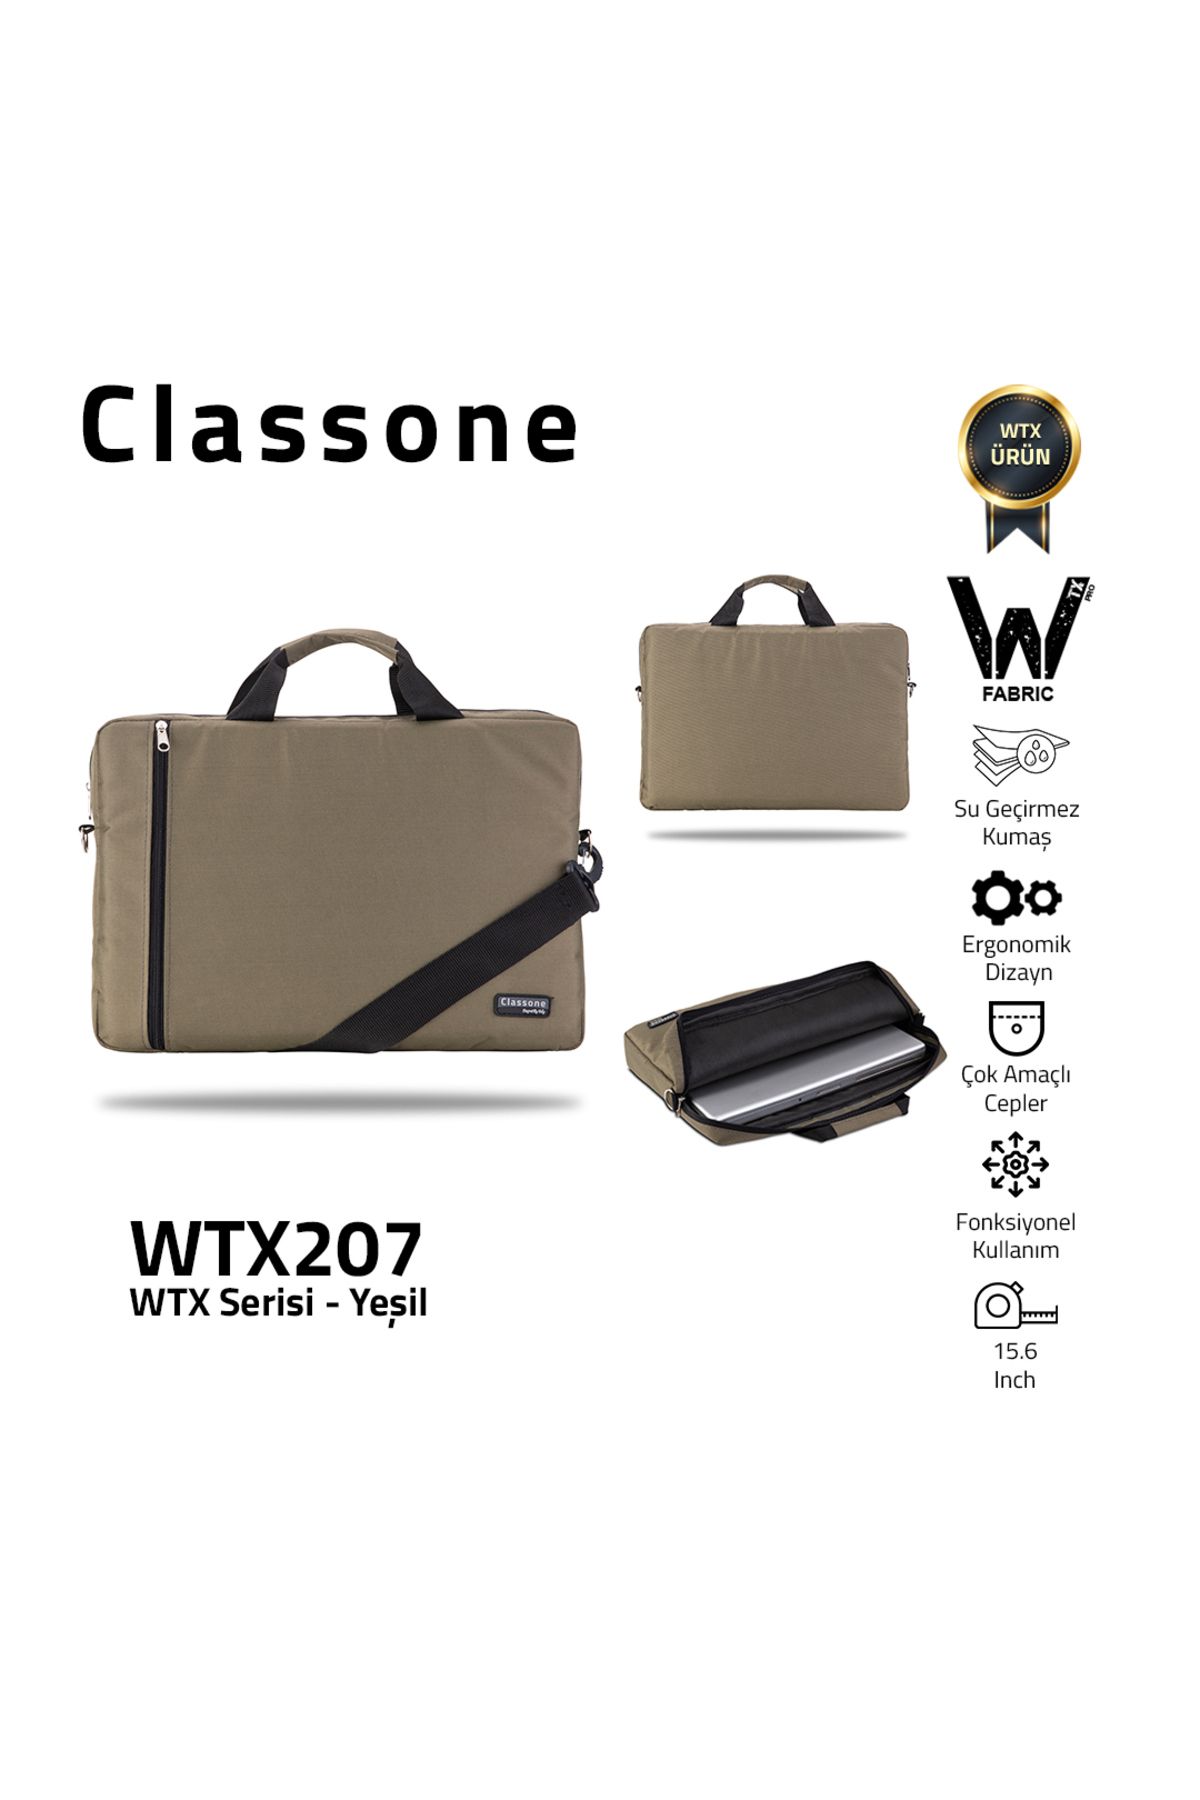 Classone Wtx207 Wtxpro Serisi Su Geçirmez Kumaş 15.6 Inch Macbook, Laptop , Notebook El Çantası- Yeşil